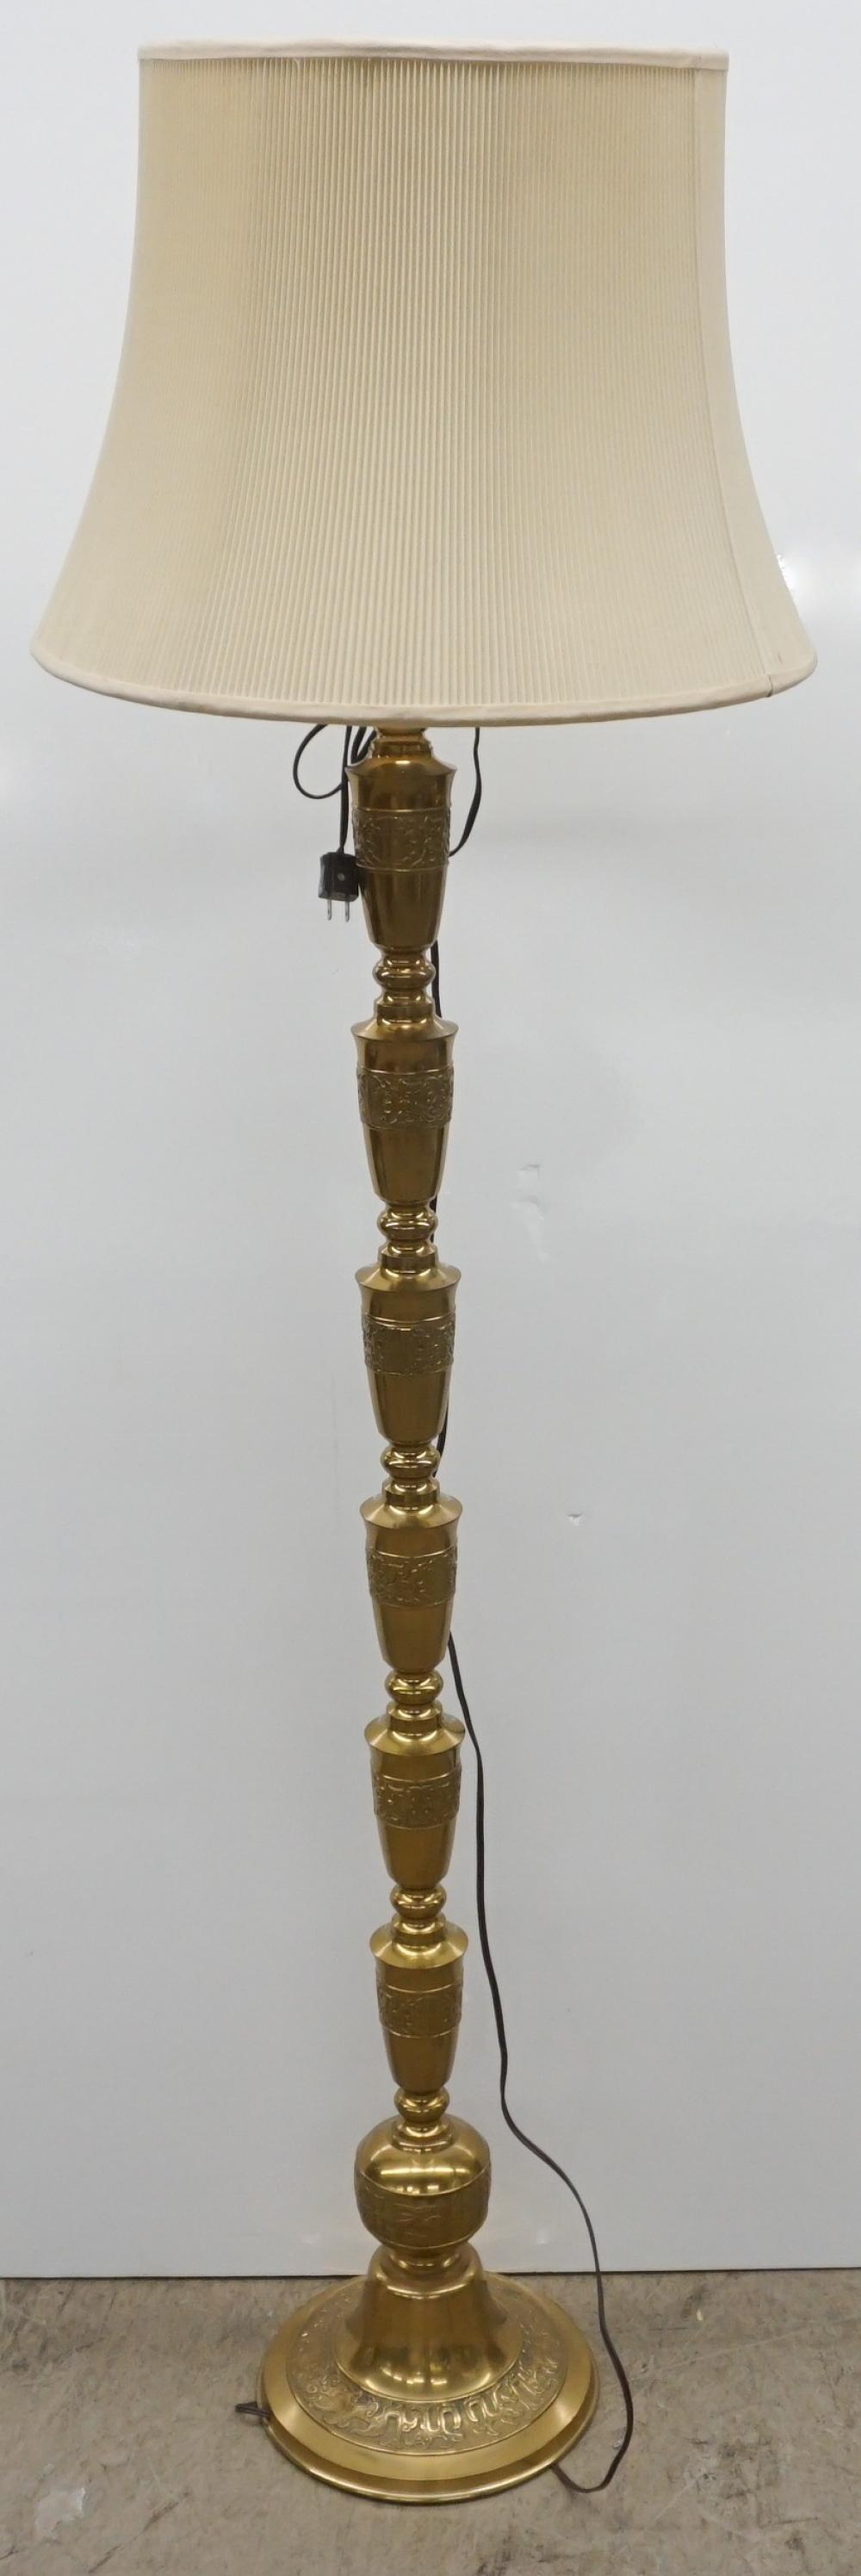 INDIAN BRASS FLOOR LAMP H 68 32a6fb